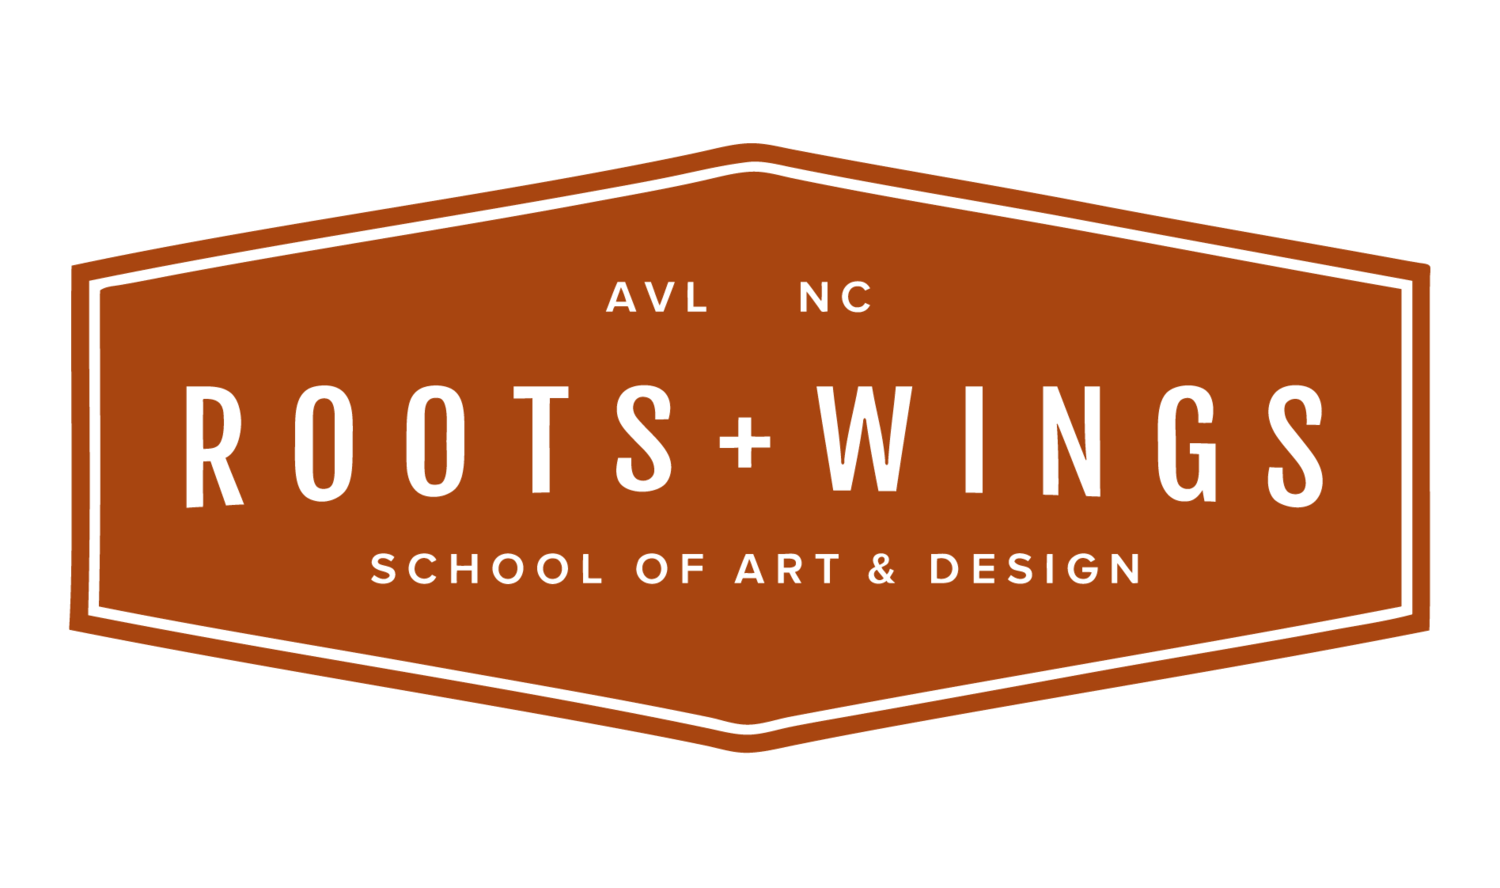 Roots + Wings School of Art